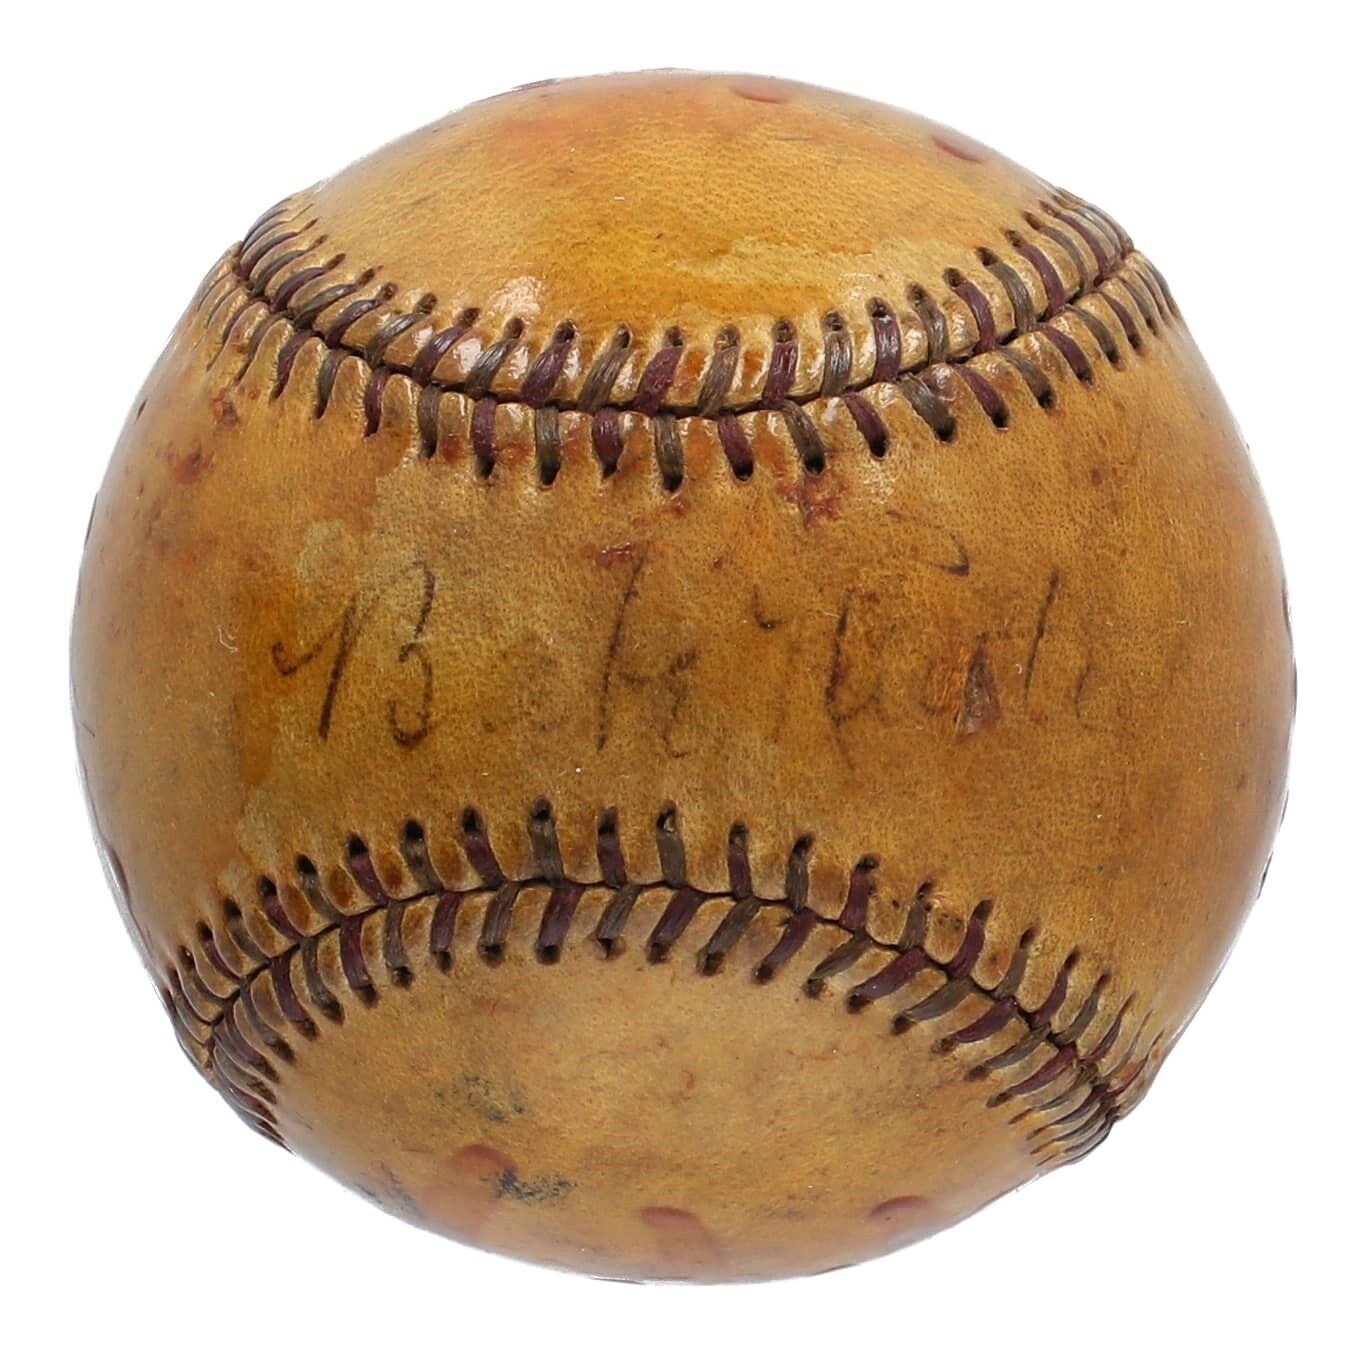 Babe Ruth Single Signed Baseball Autograph - JSA Certified LOA - Auto Grade 4